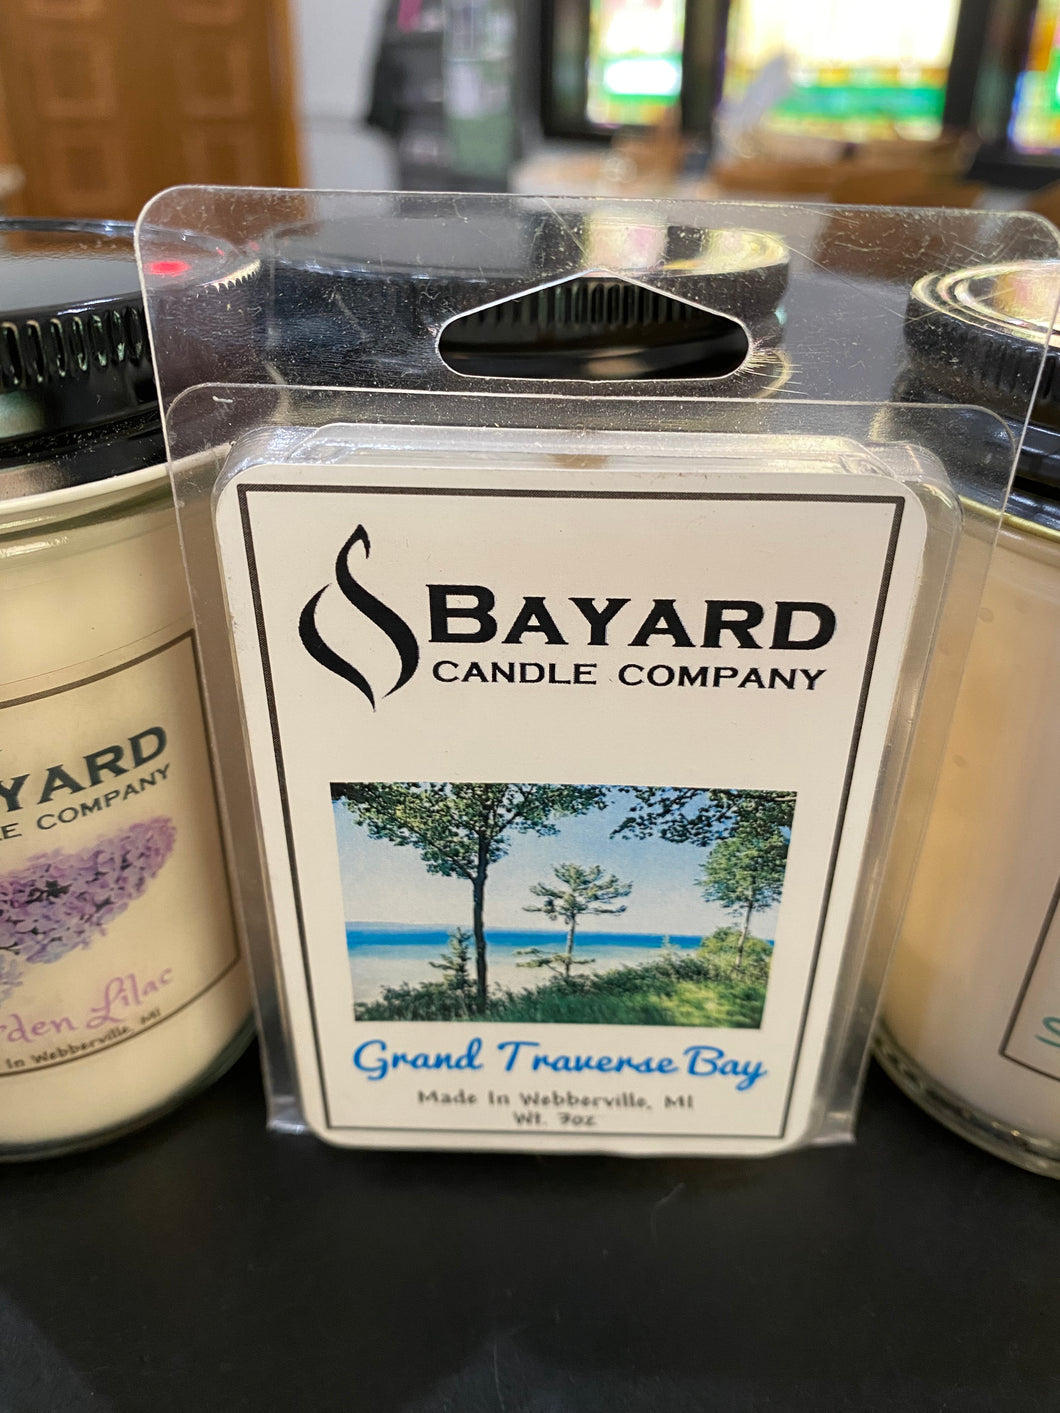 Grand Traverse Bay Wax Melt - Bayard Candle Company